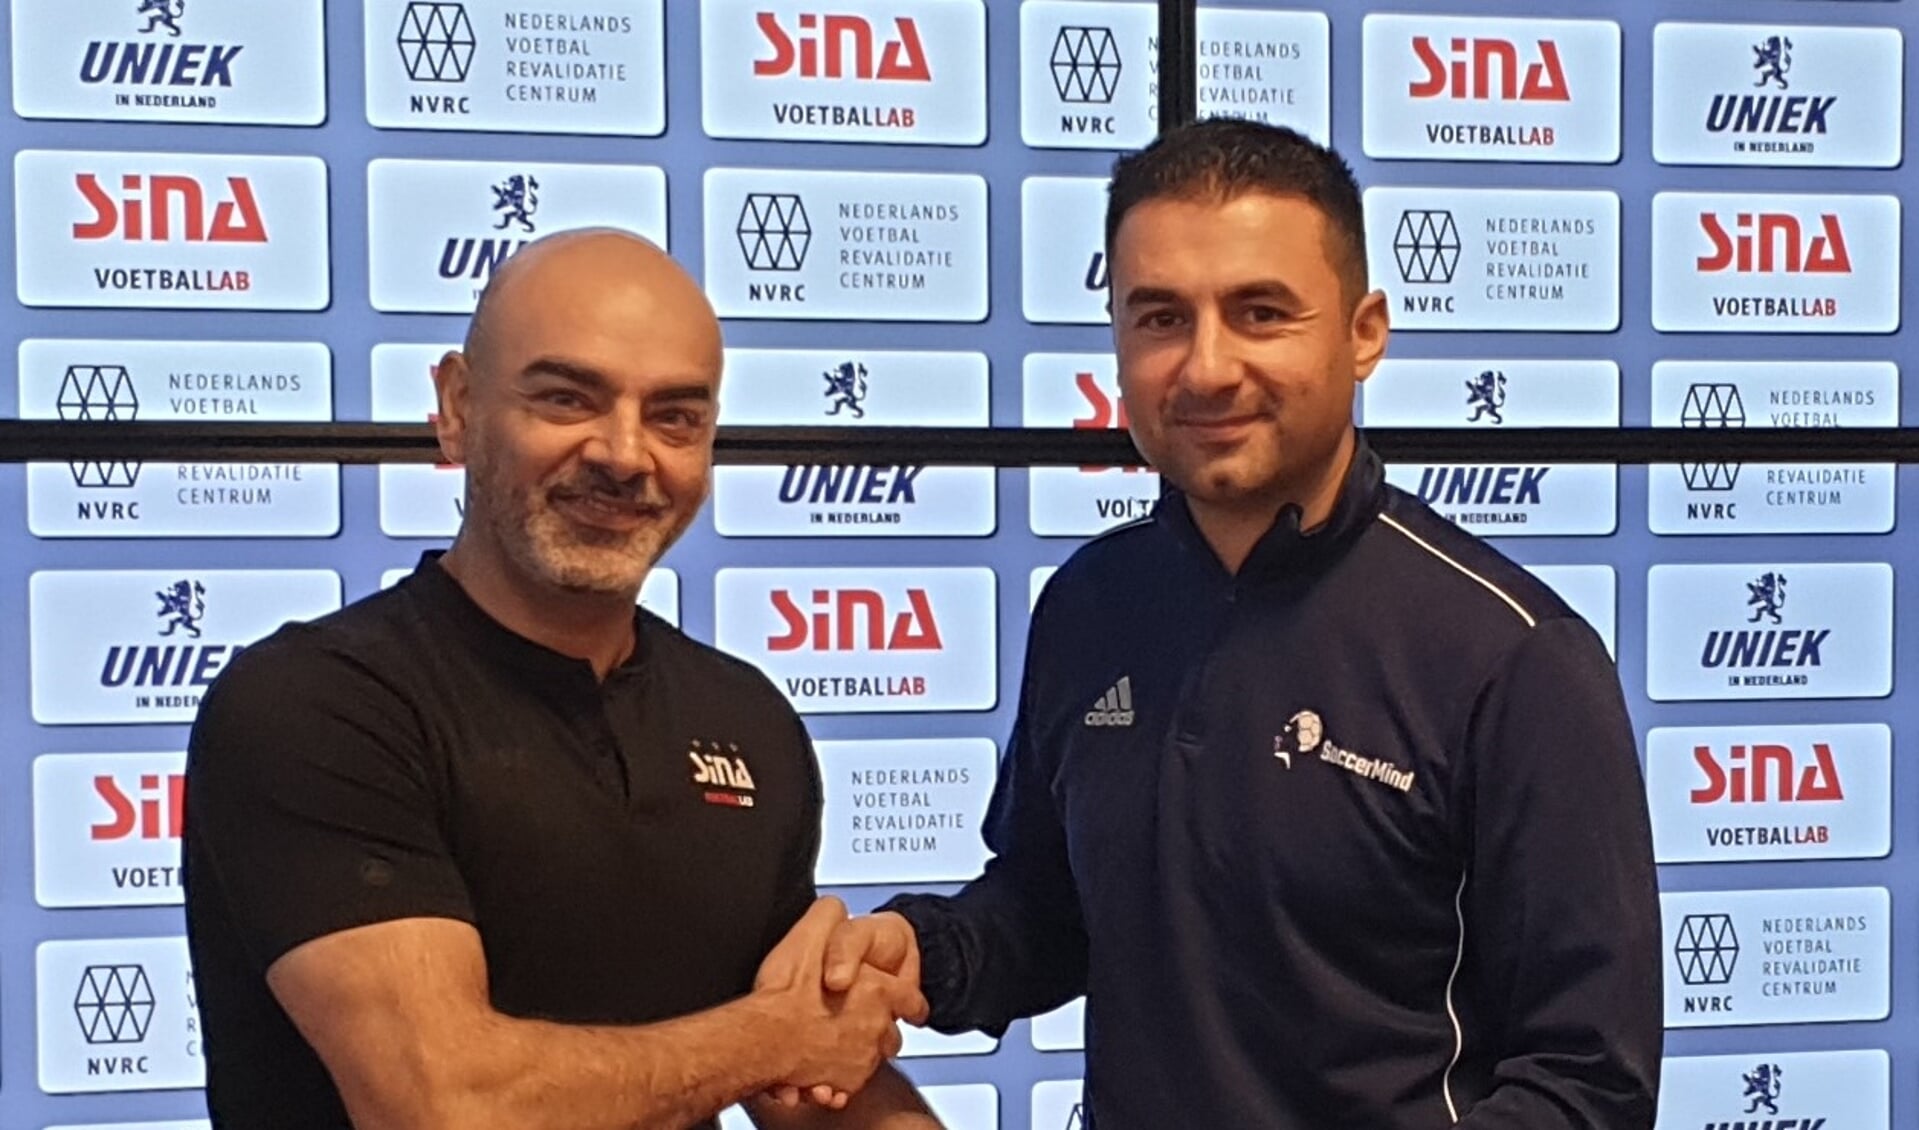 Siamak Azadi van SINA Voetballab (links) en Cengiz Caglar van SoccerMind. 